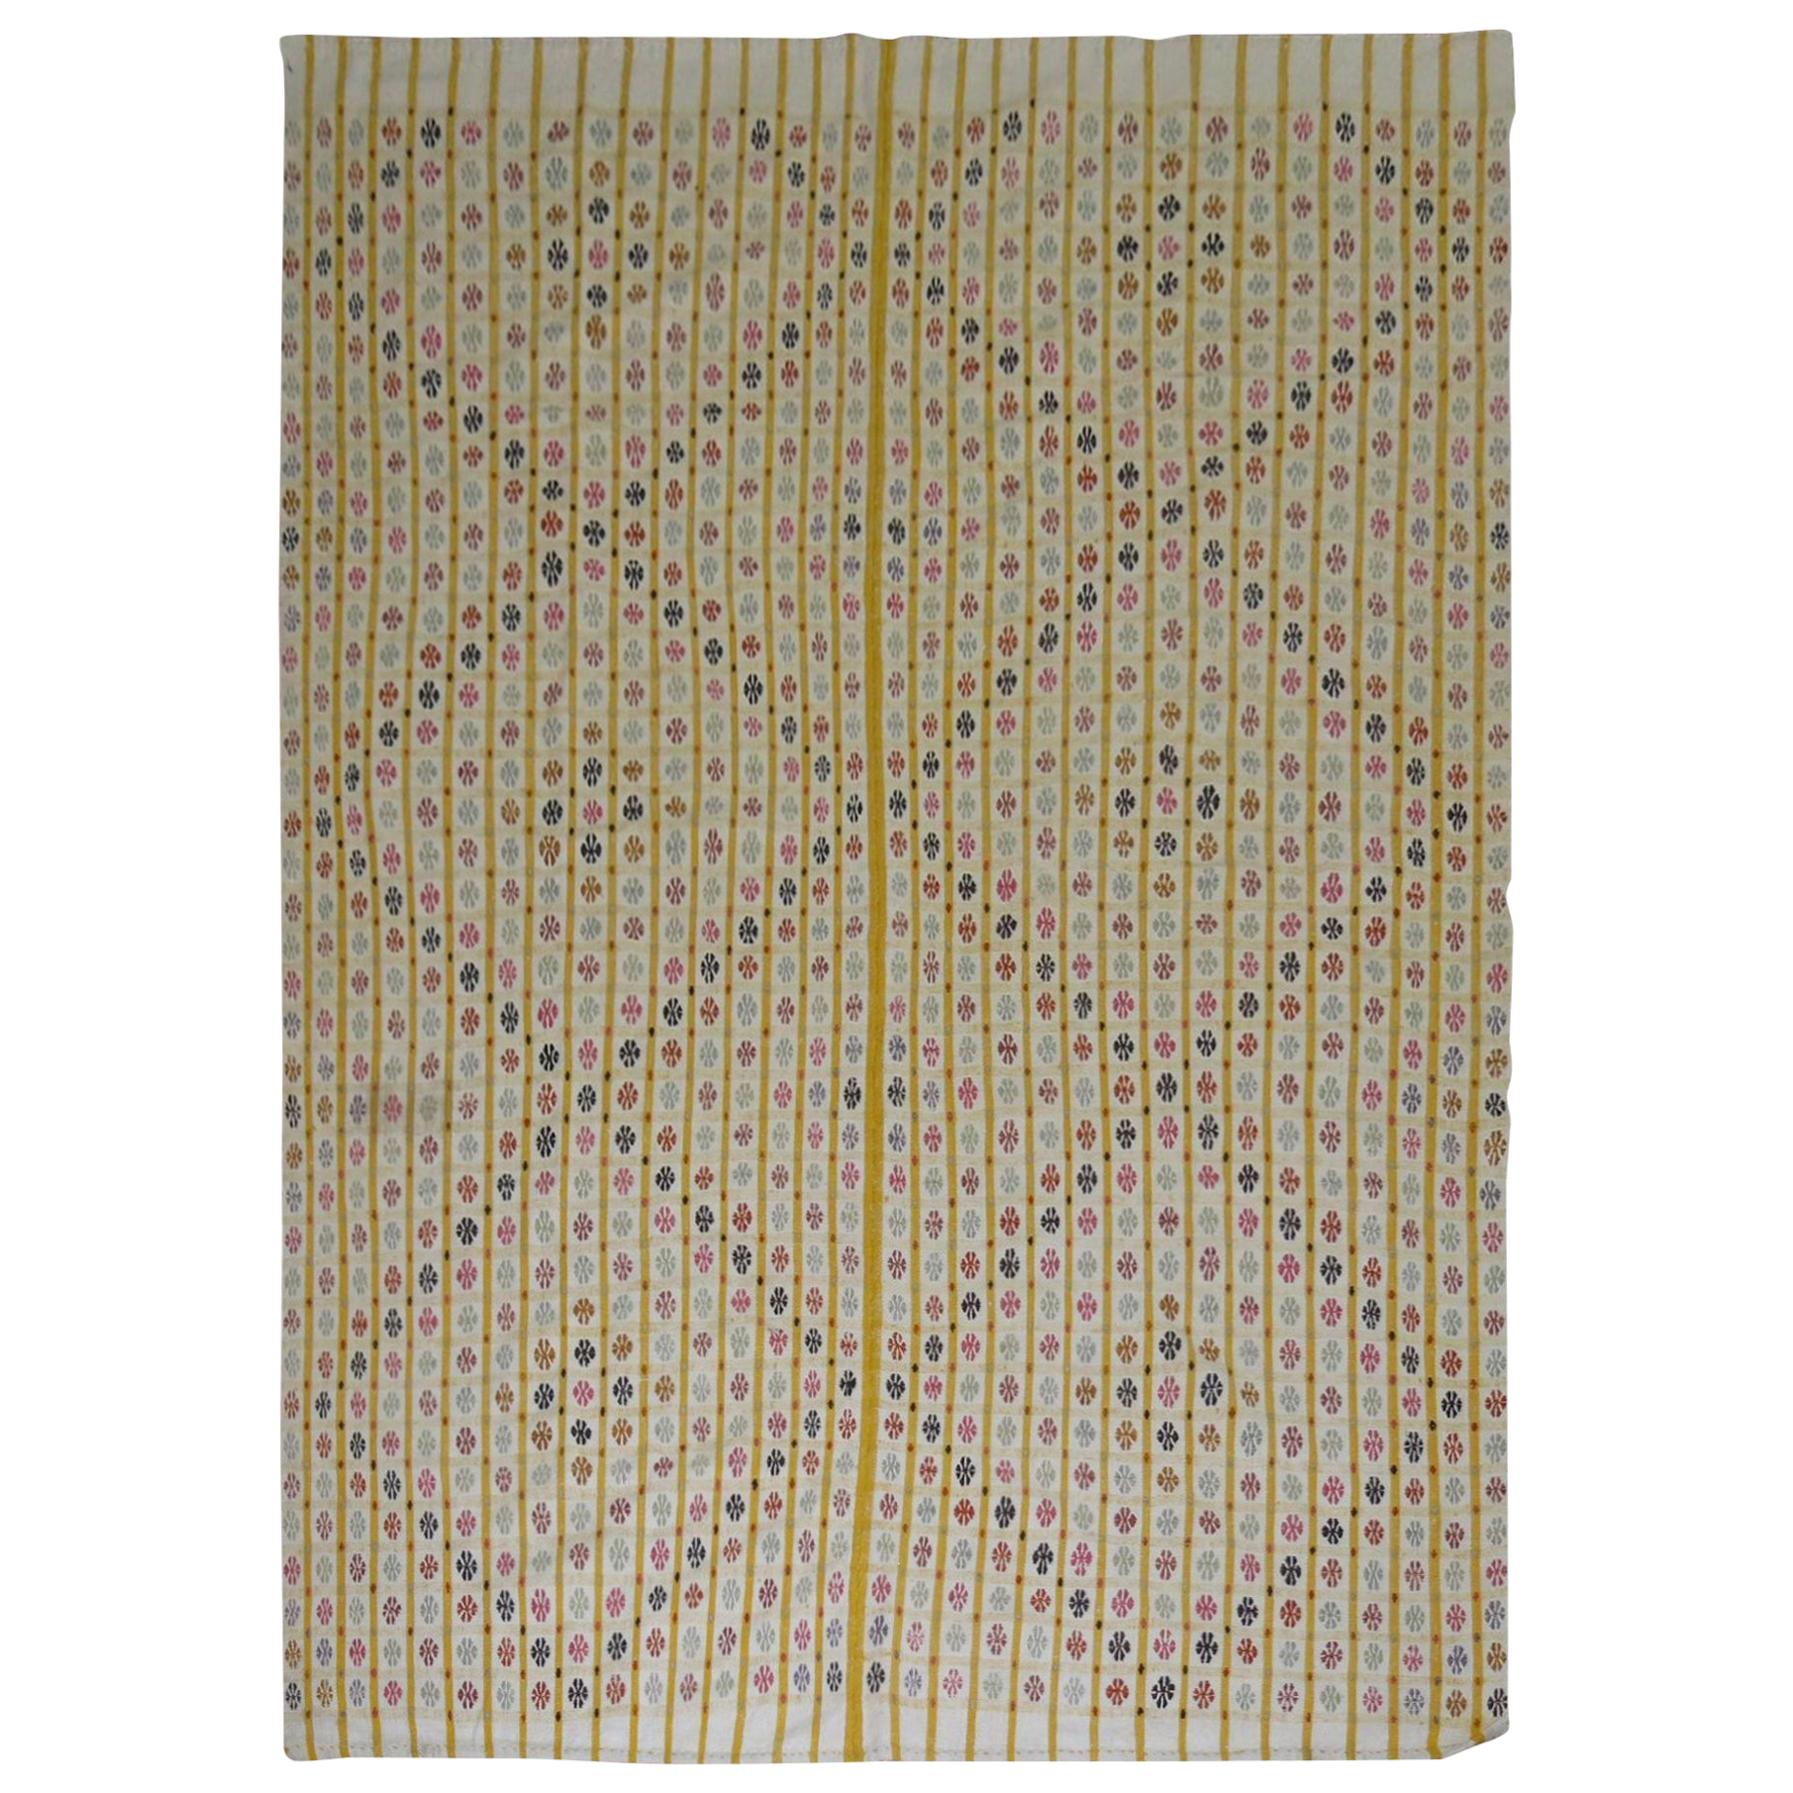 Turkish Cicim Flat-Weave or Blanket, 20th Century